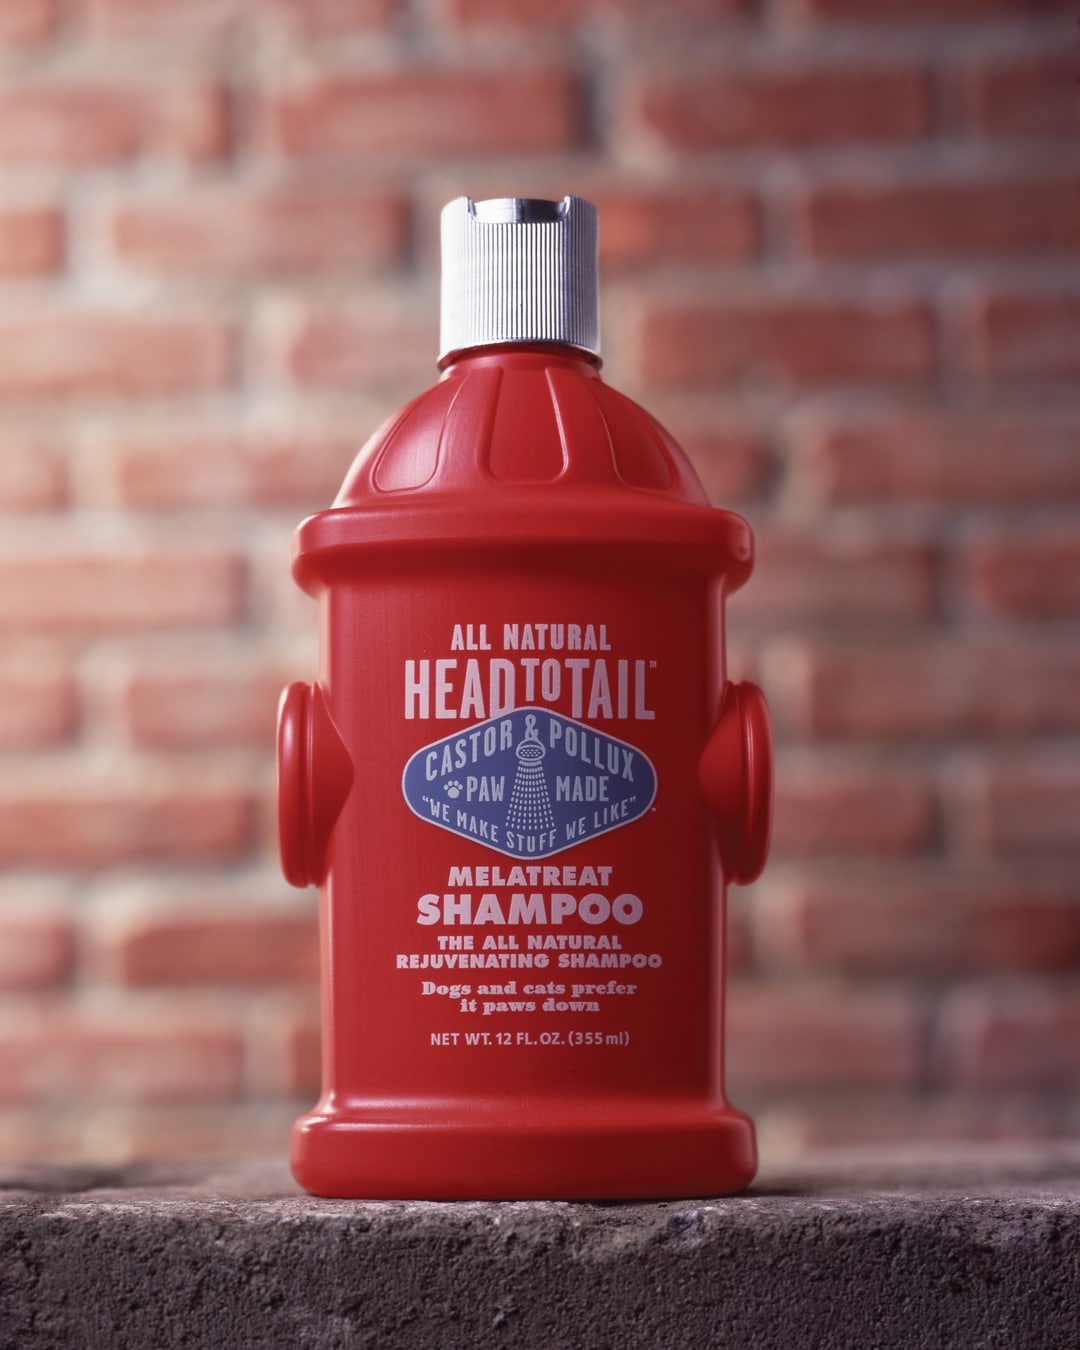 Castor & Pollux Fire Hydrant pet shampoo bottle package design